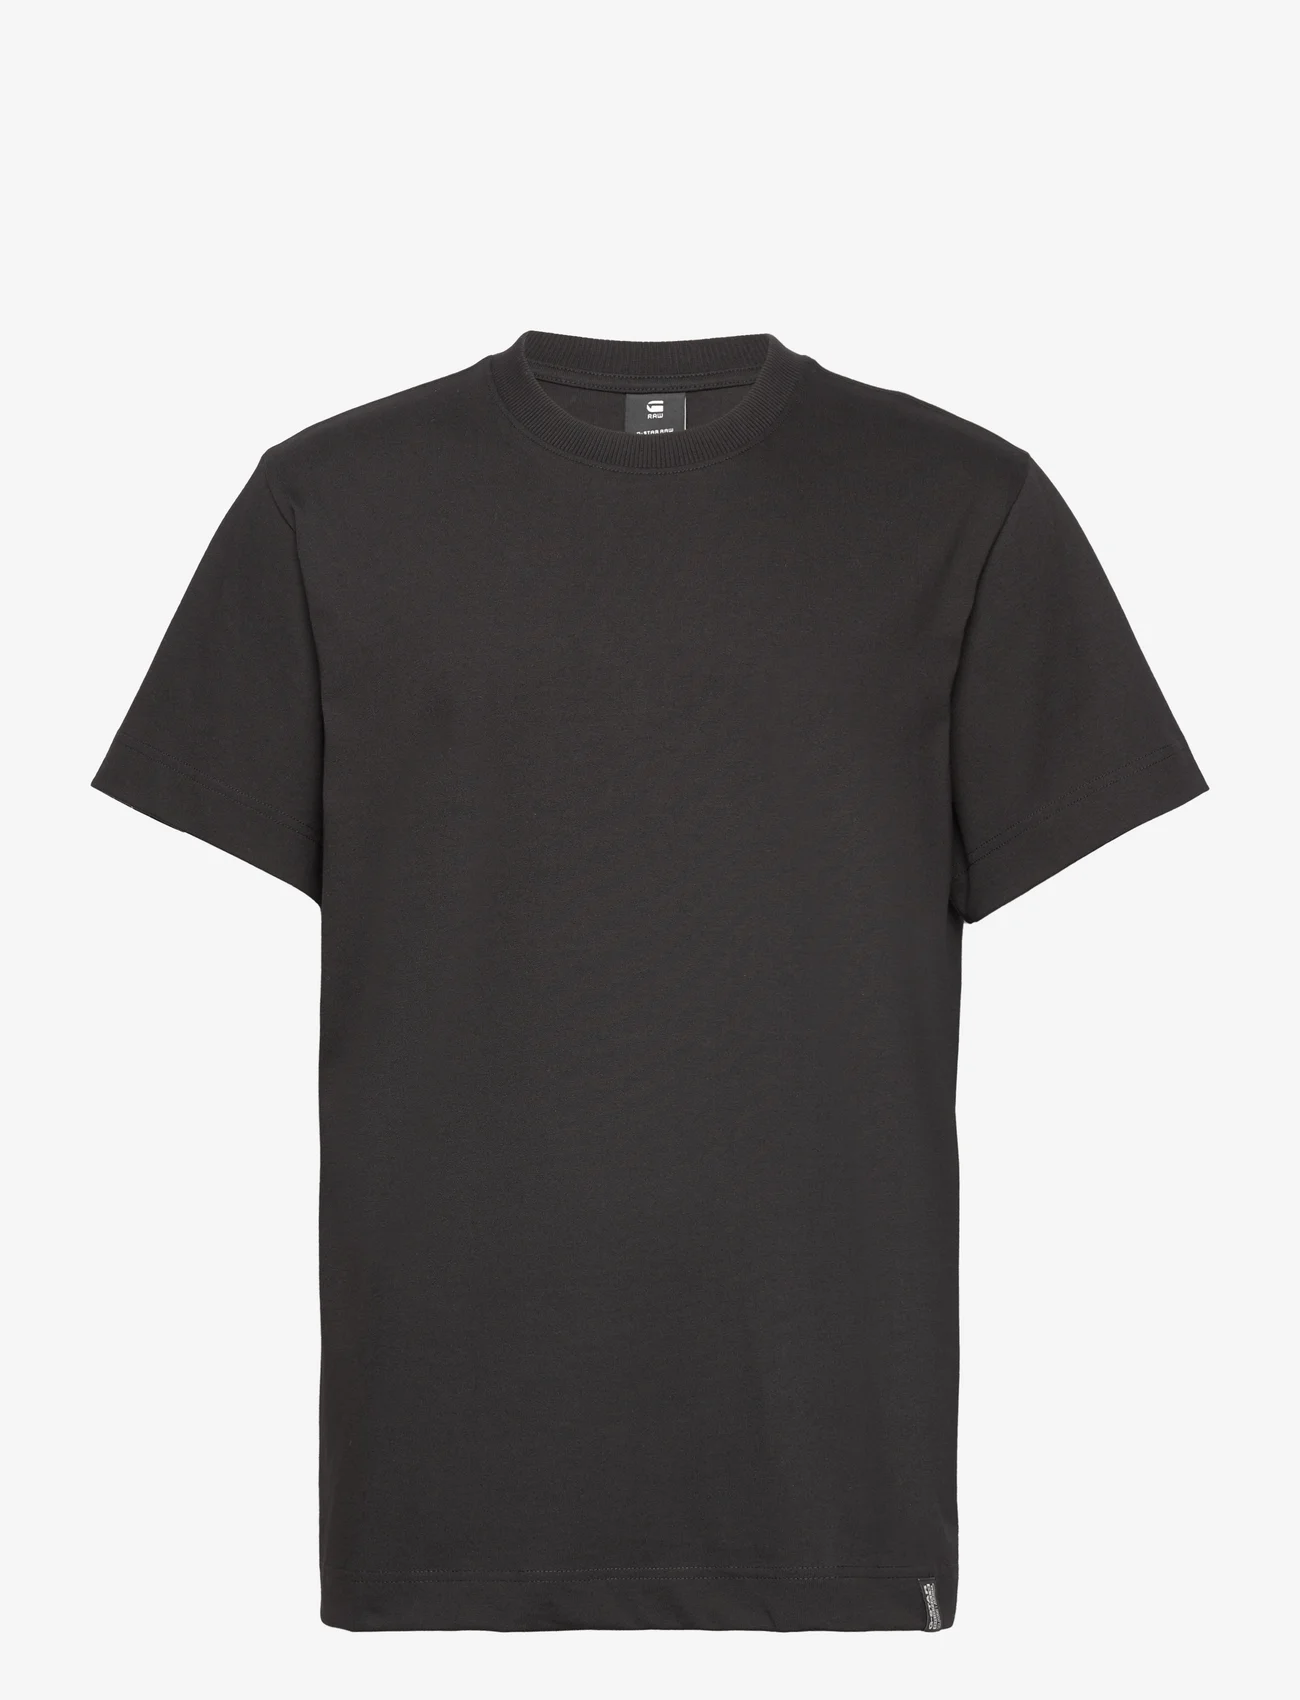 G-Star RAW - Essential loose r t - t-shirts - dk black - 0